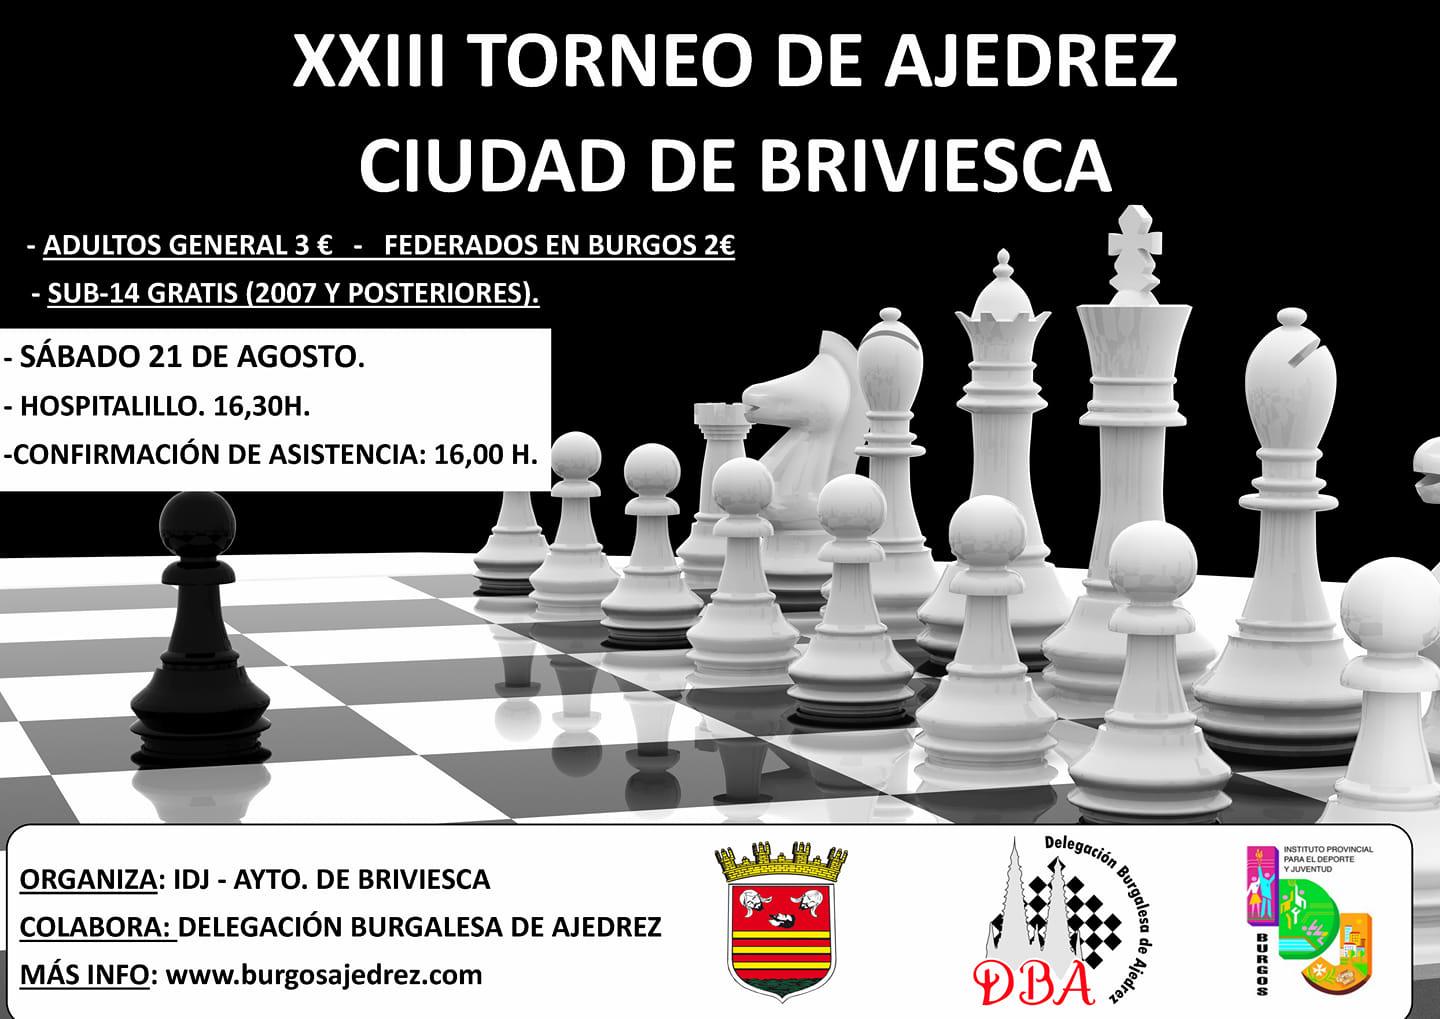 XXIII Torneo de ajedrez ciudad de Briviesca.